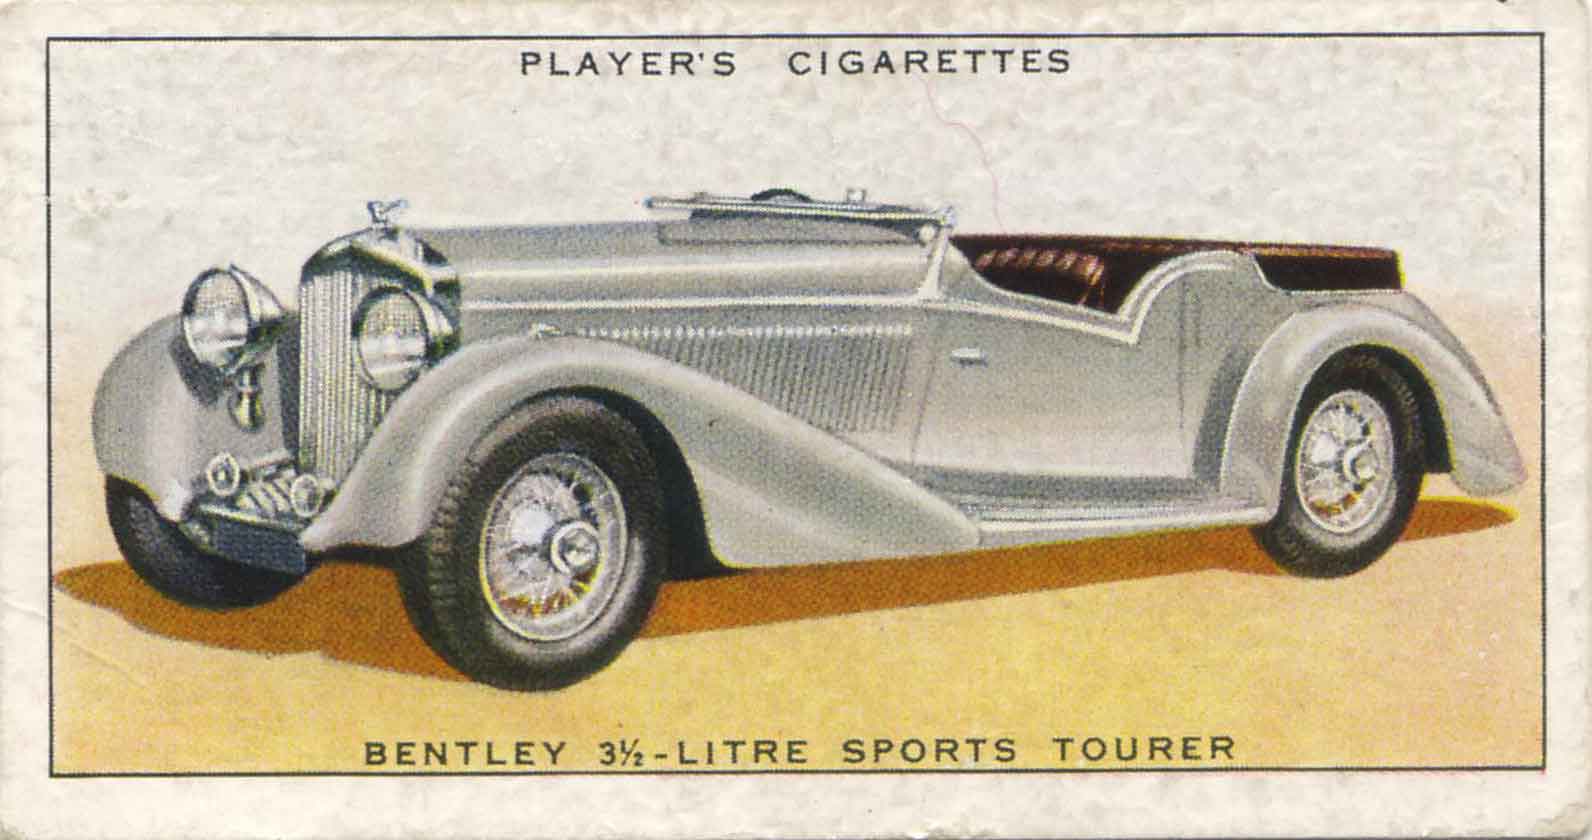 Bentley Sports Tourer. 1937 cigarette card.